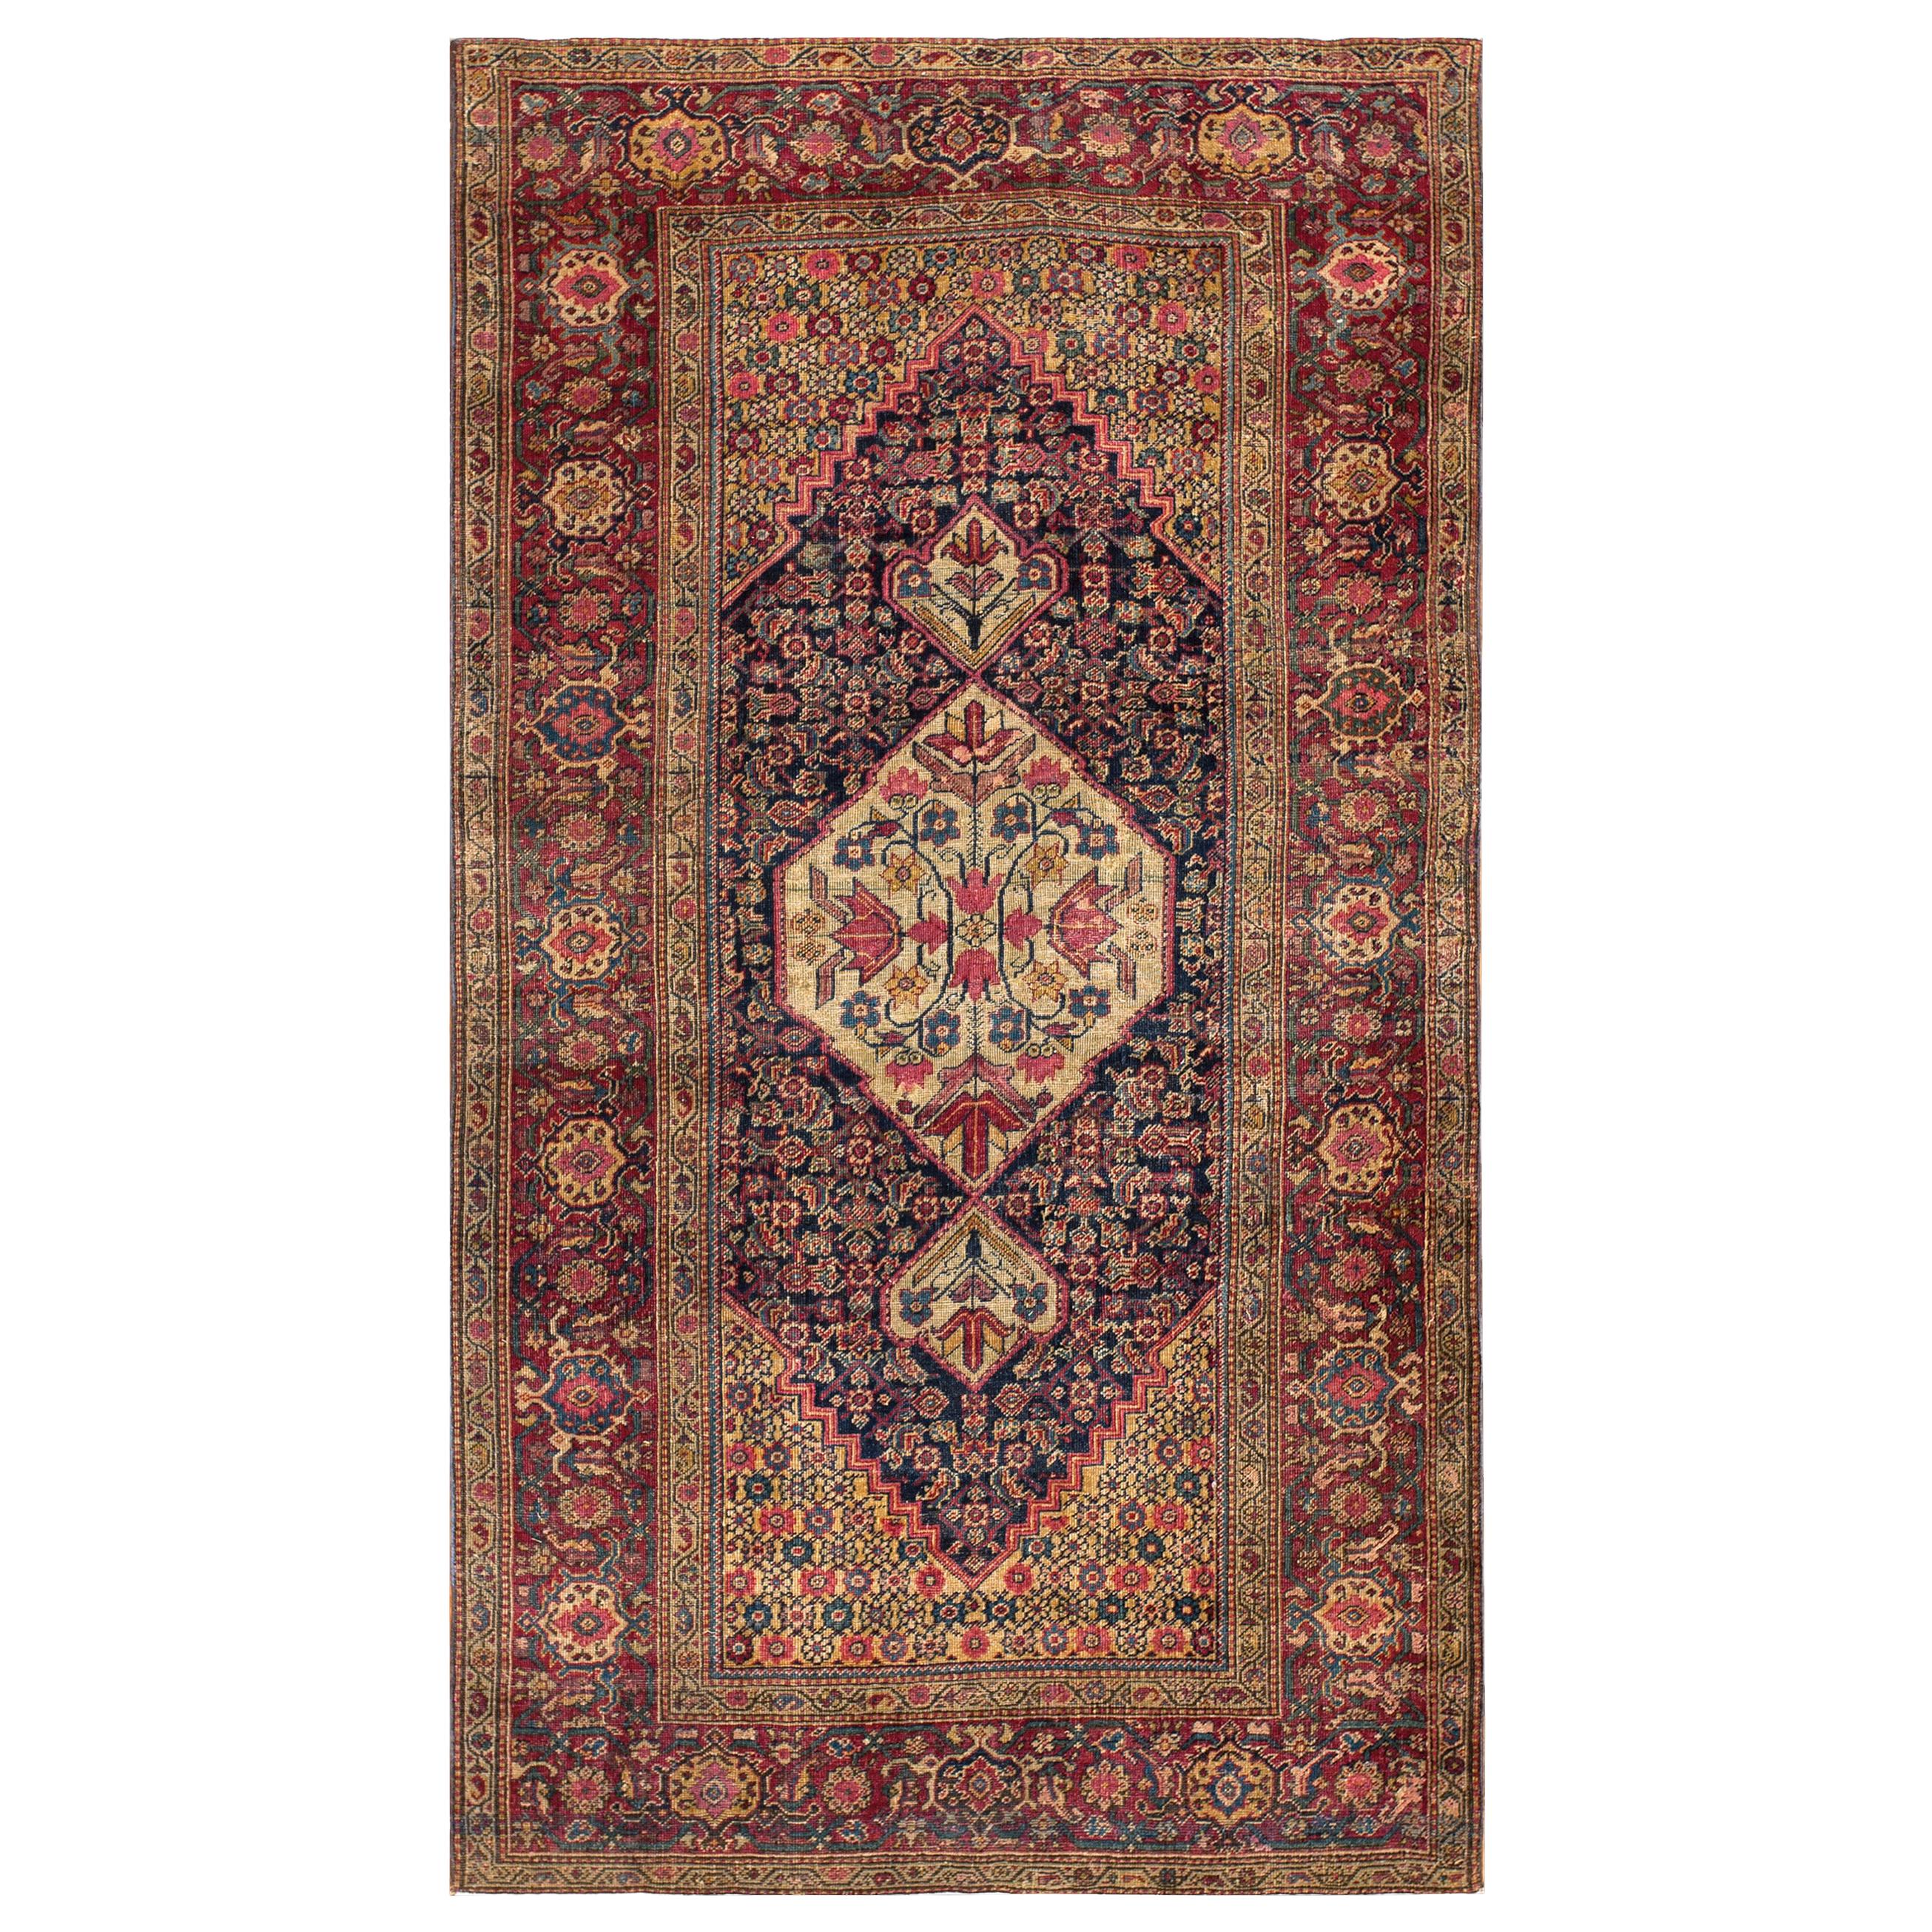 19th Century Persian Farahn Carpet ( 3'9" x 6'5" - 115 x 198 ) 